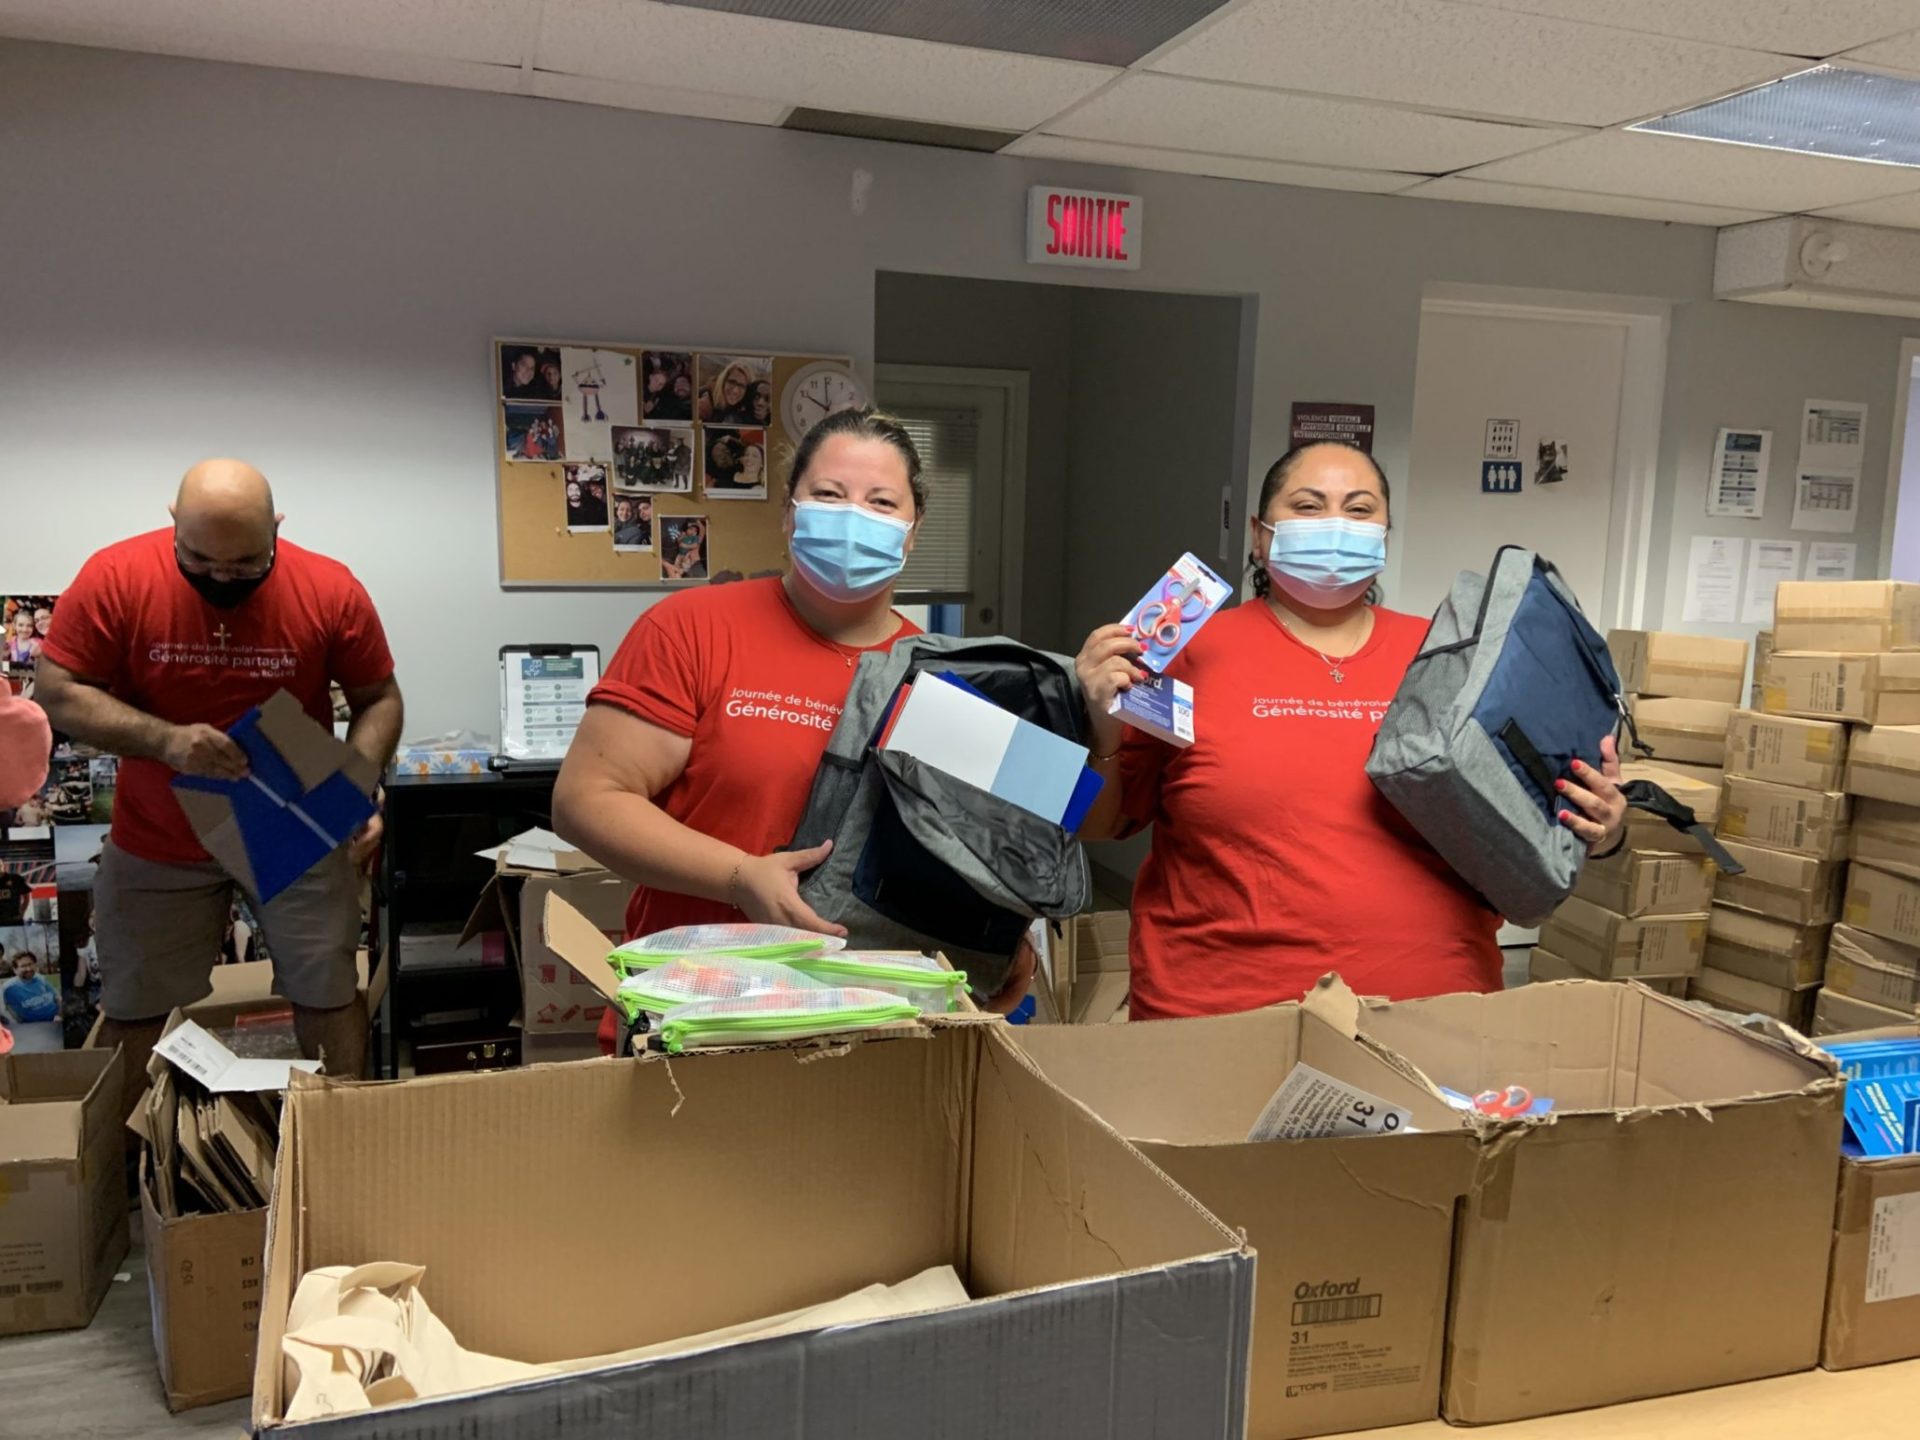 Rogers volunteers packing school supplies in boxes inside office